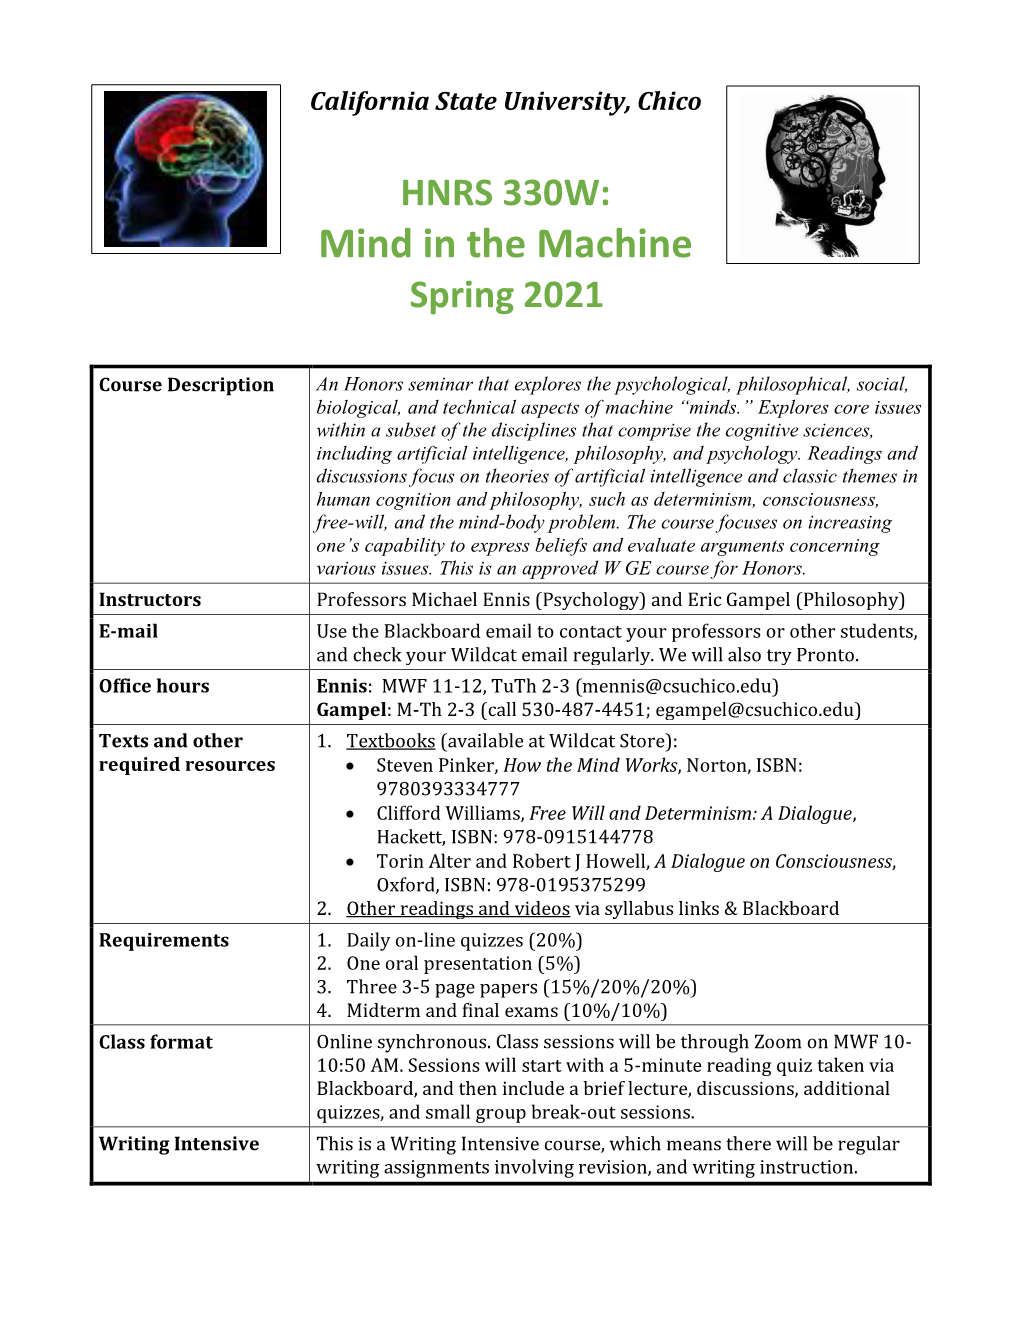 Mind in the Machine Spring 2021